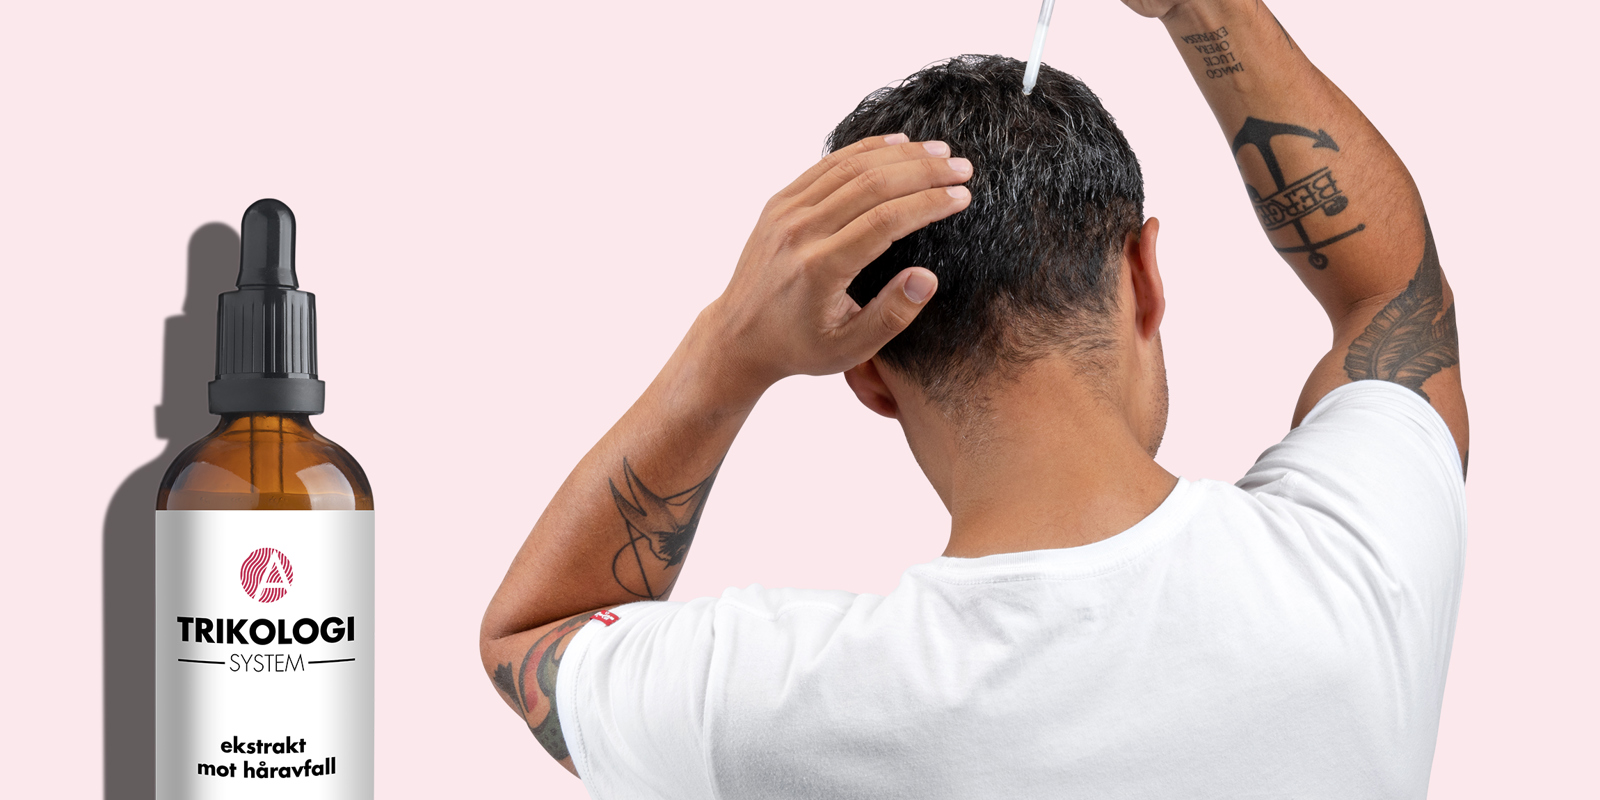 Trikologi system ekstrakt mot håravfall